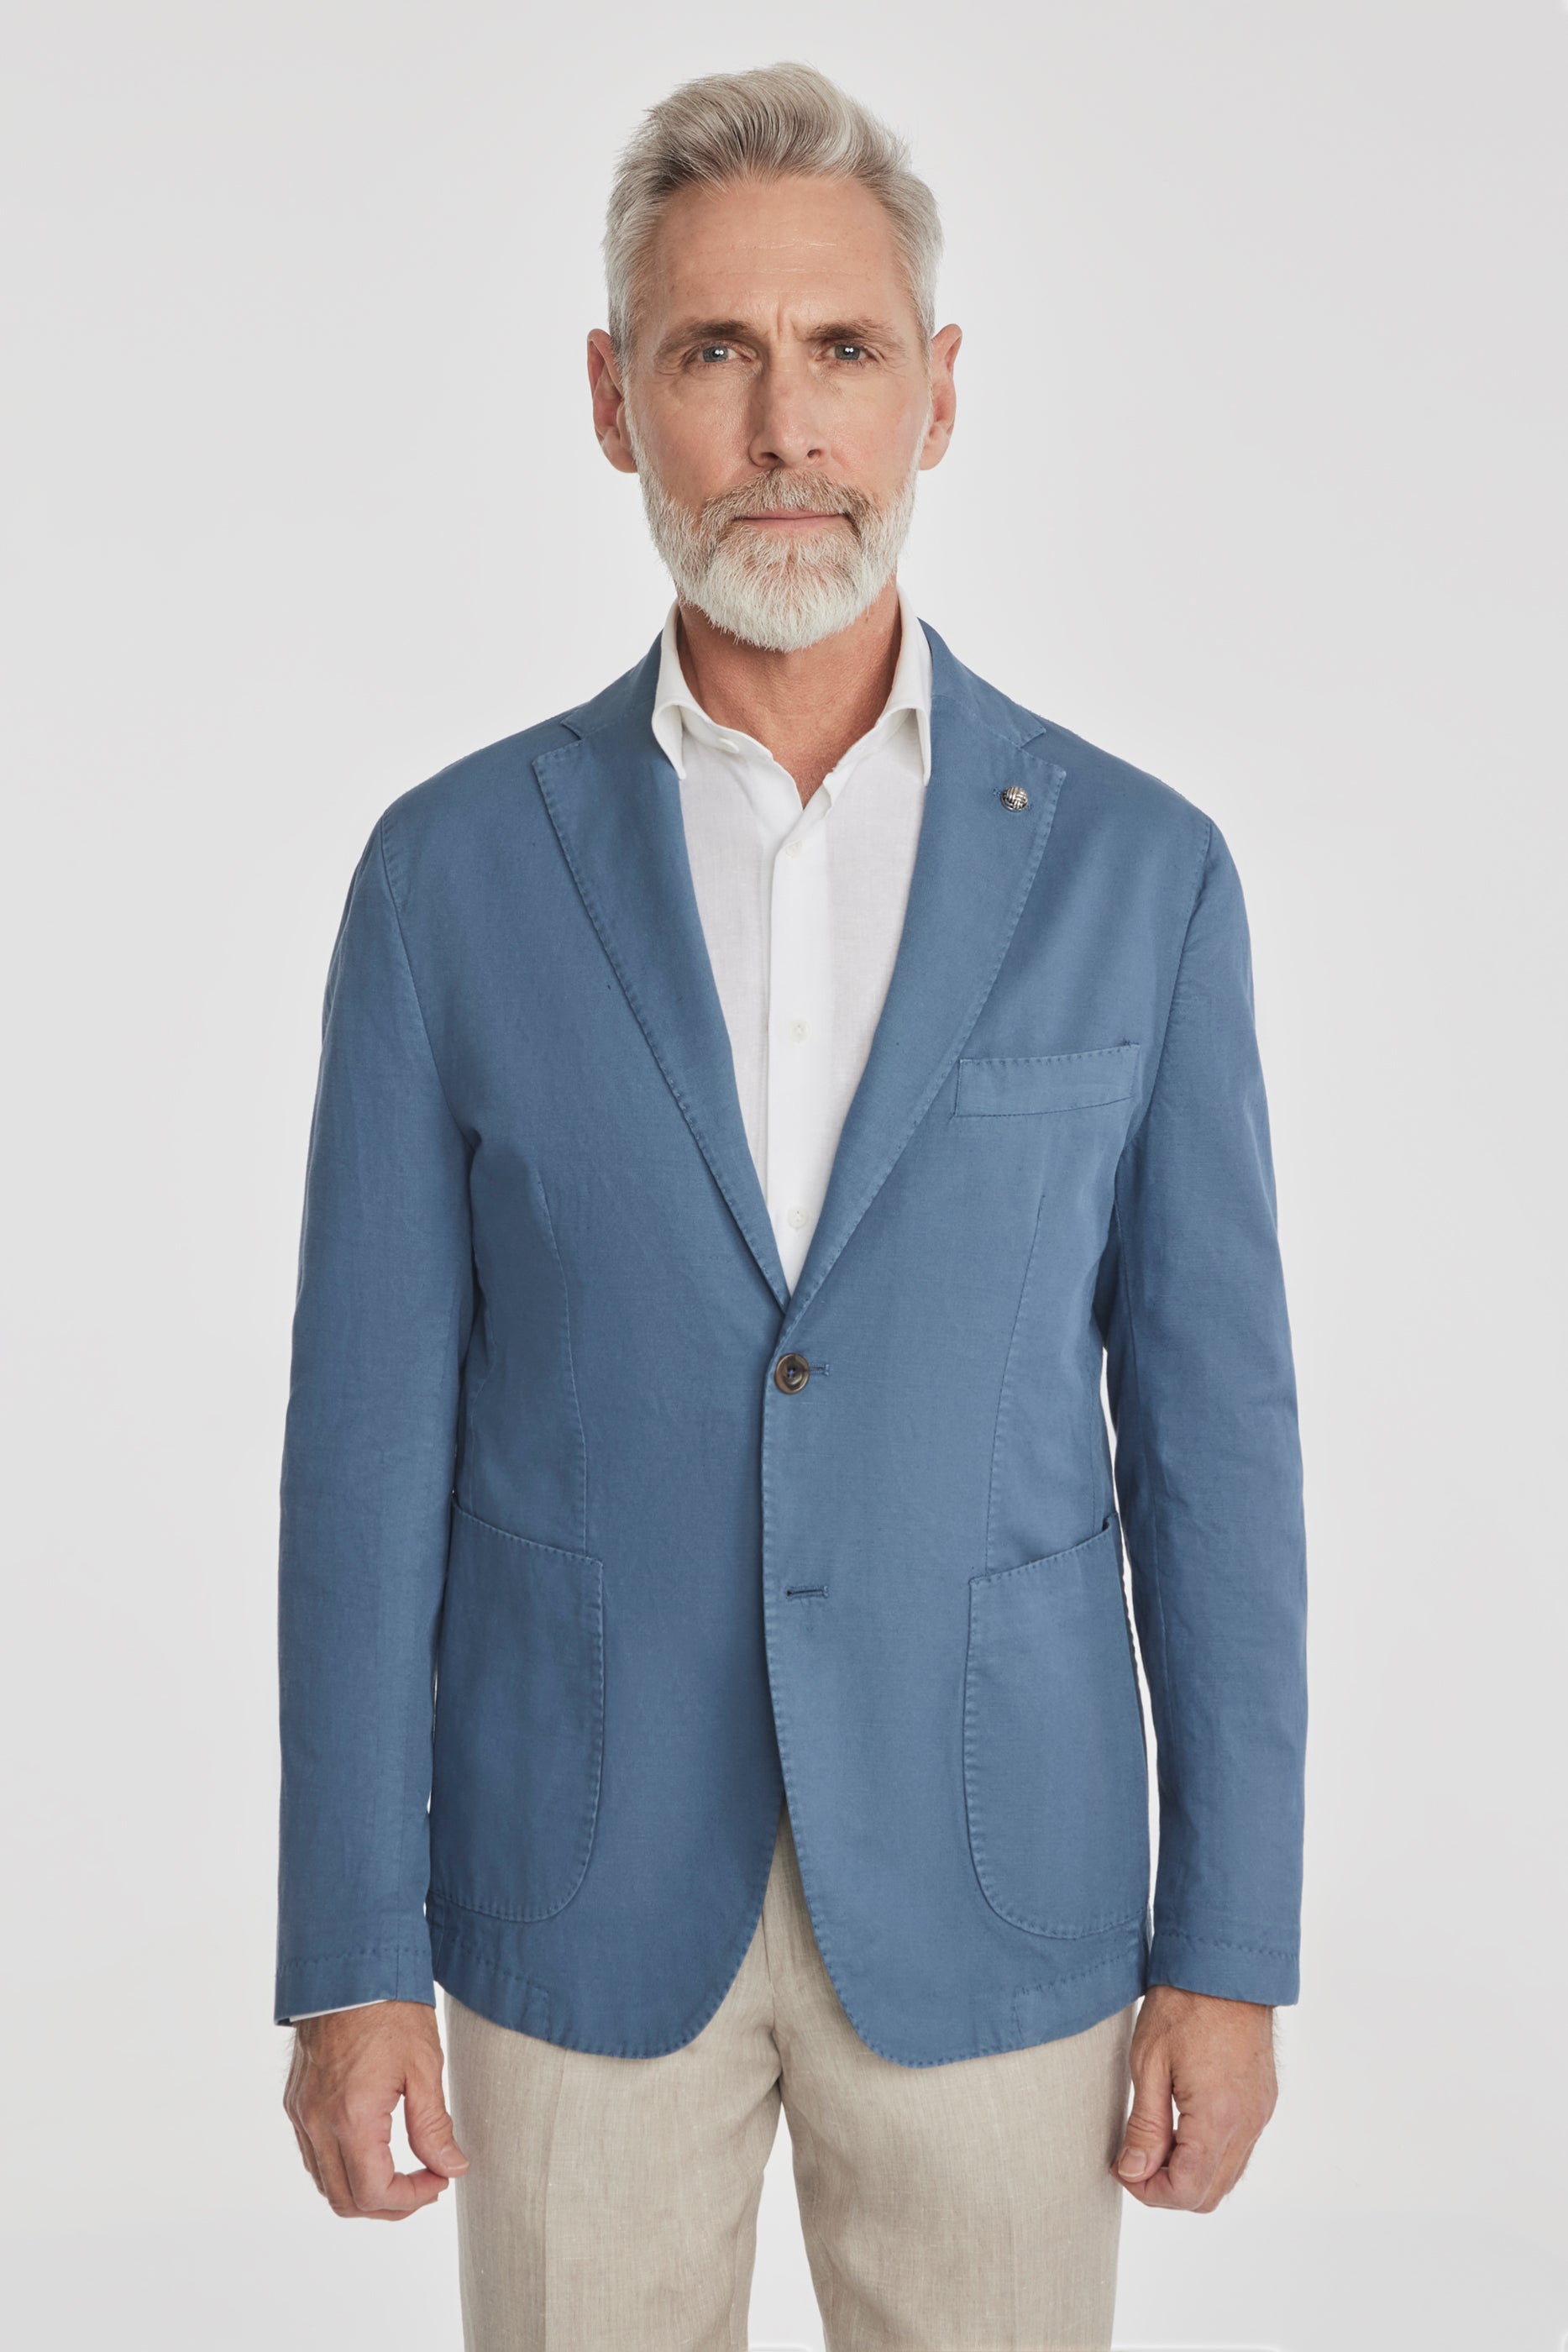 Vue alternative Eaton veston en coton et lin en bleu ciel